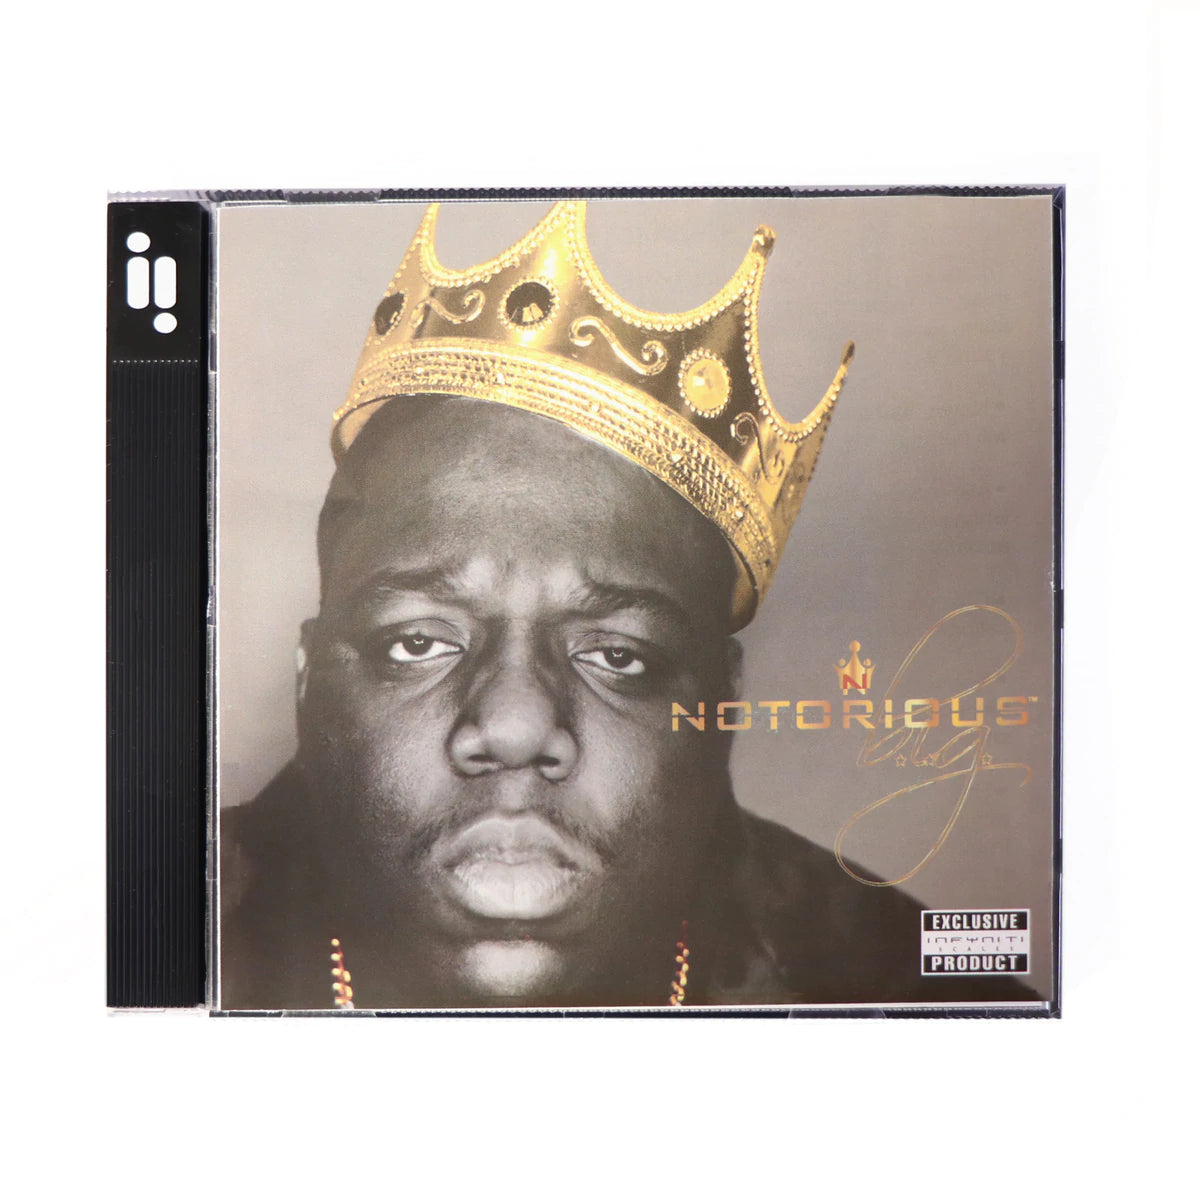 Notorious BIG CD, Digital Pocket Scale, 500g x 0.1g